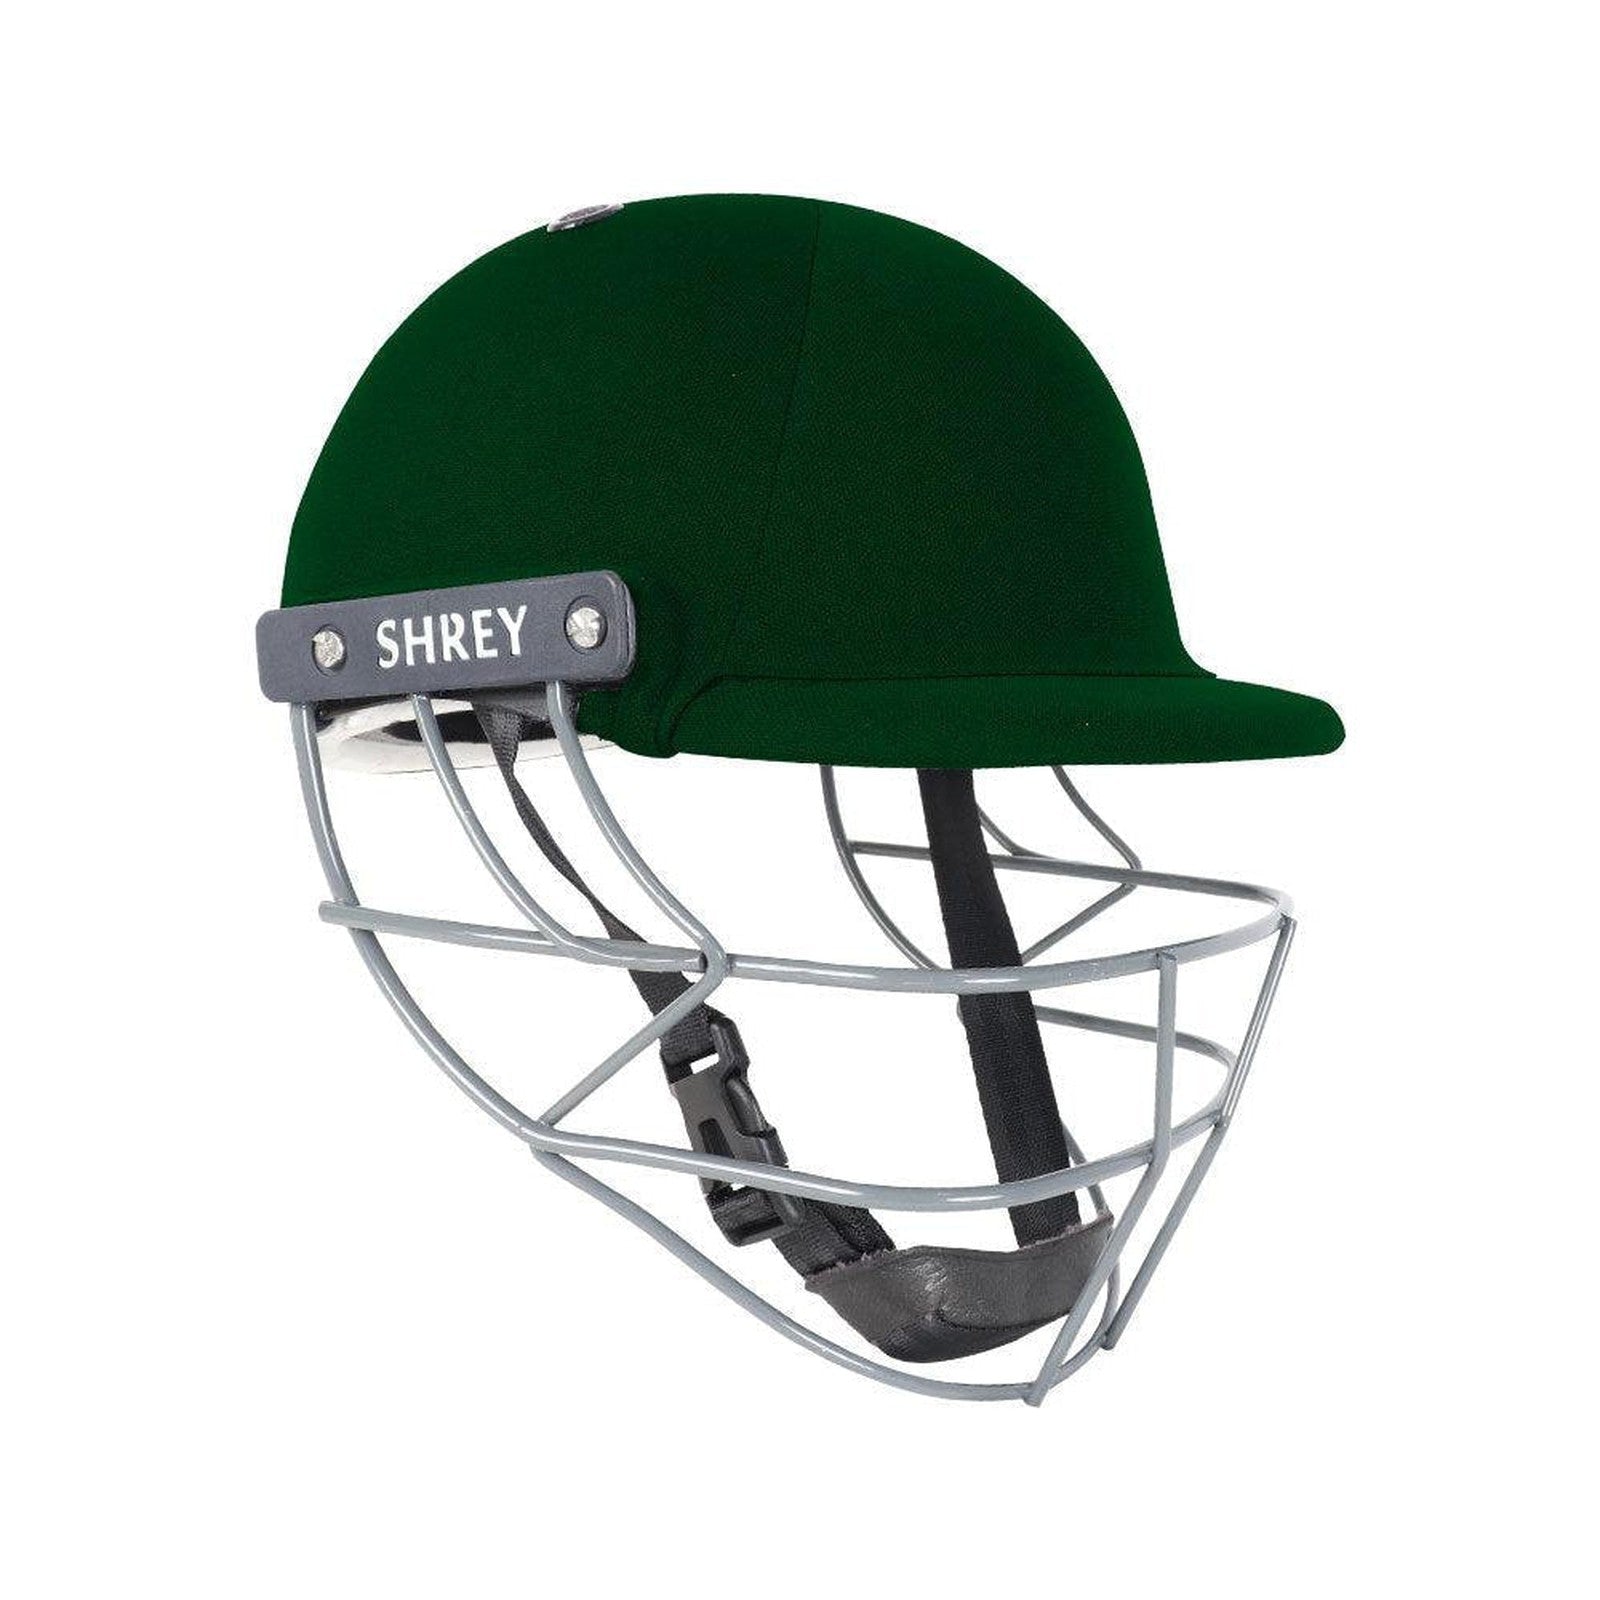 Shrey Performance 2.0 Cricket Helmet With Mild Steel - Green Youth